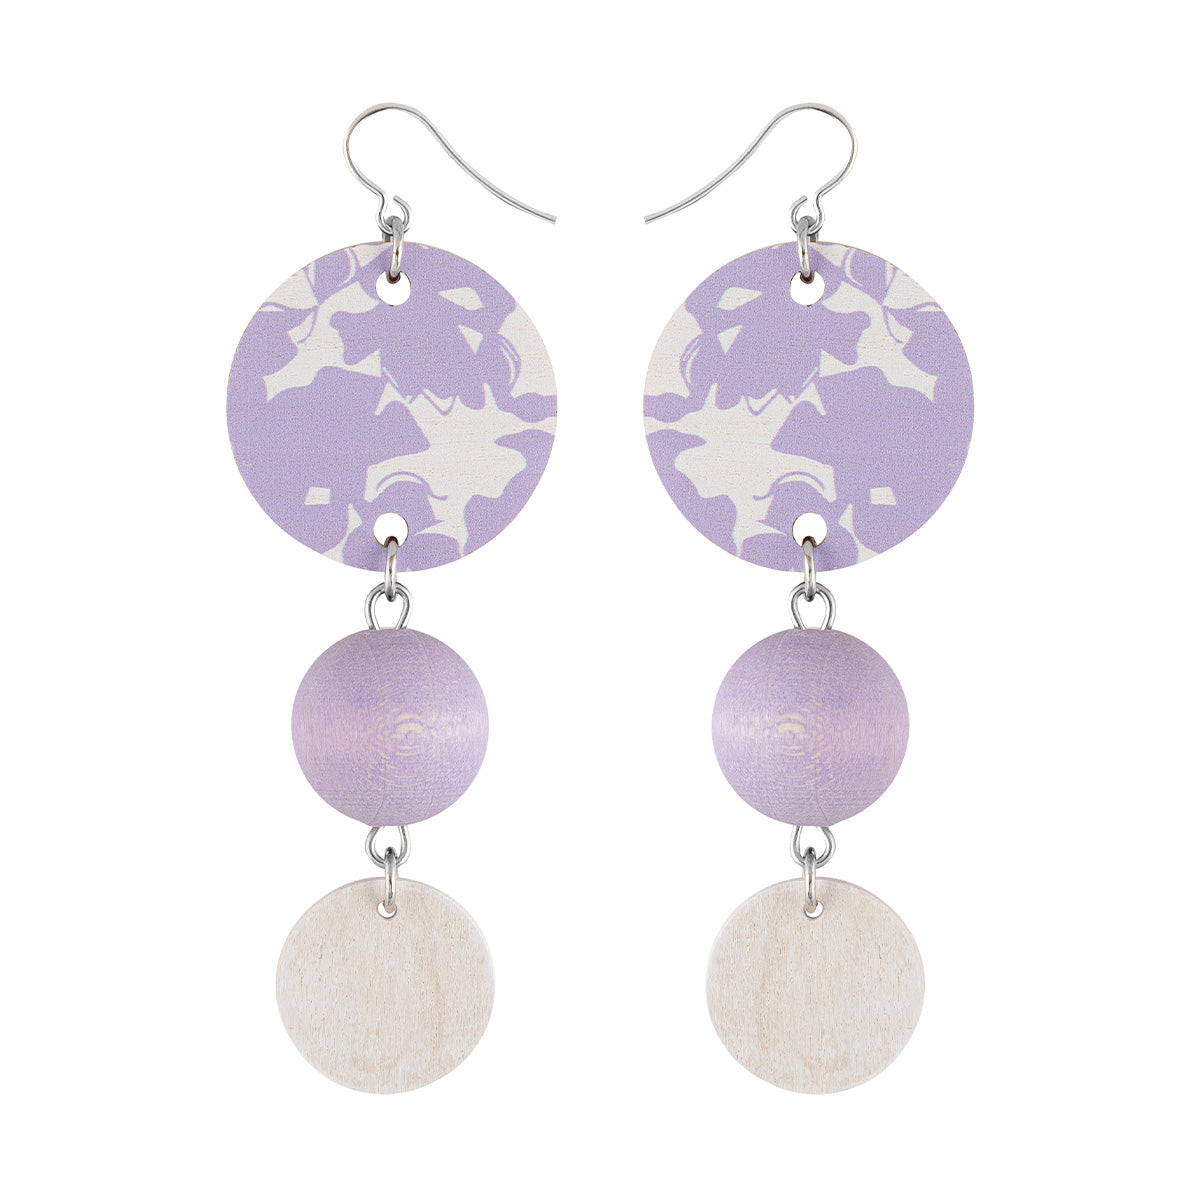 Apollo earrings, lavender